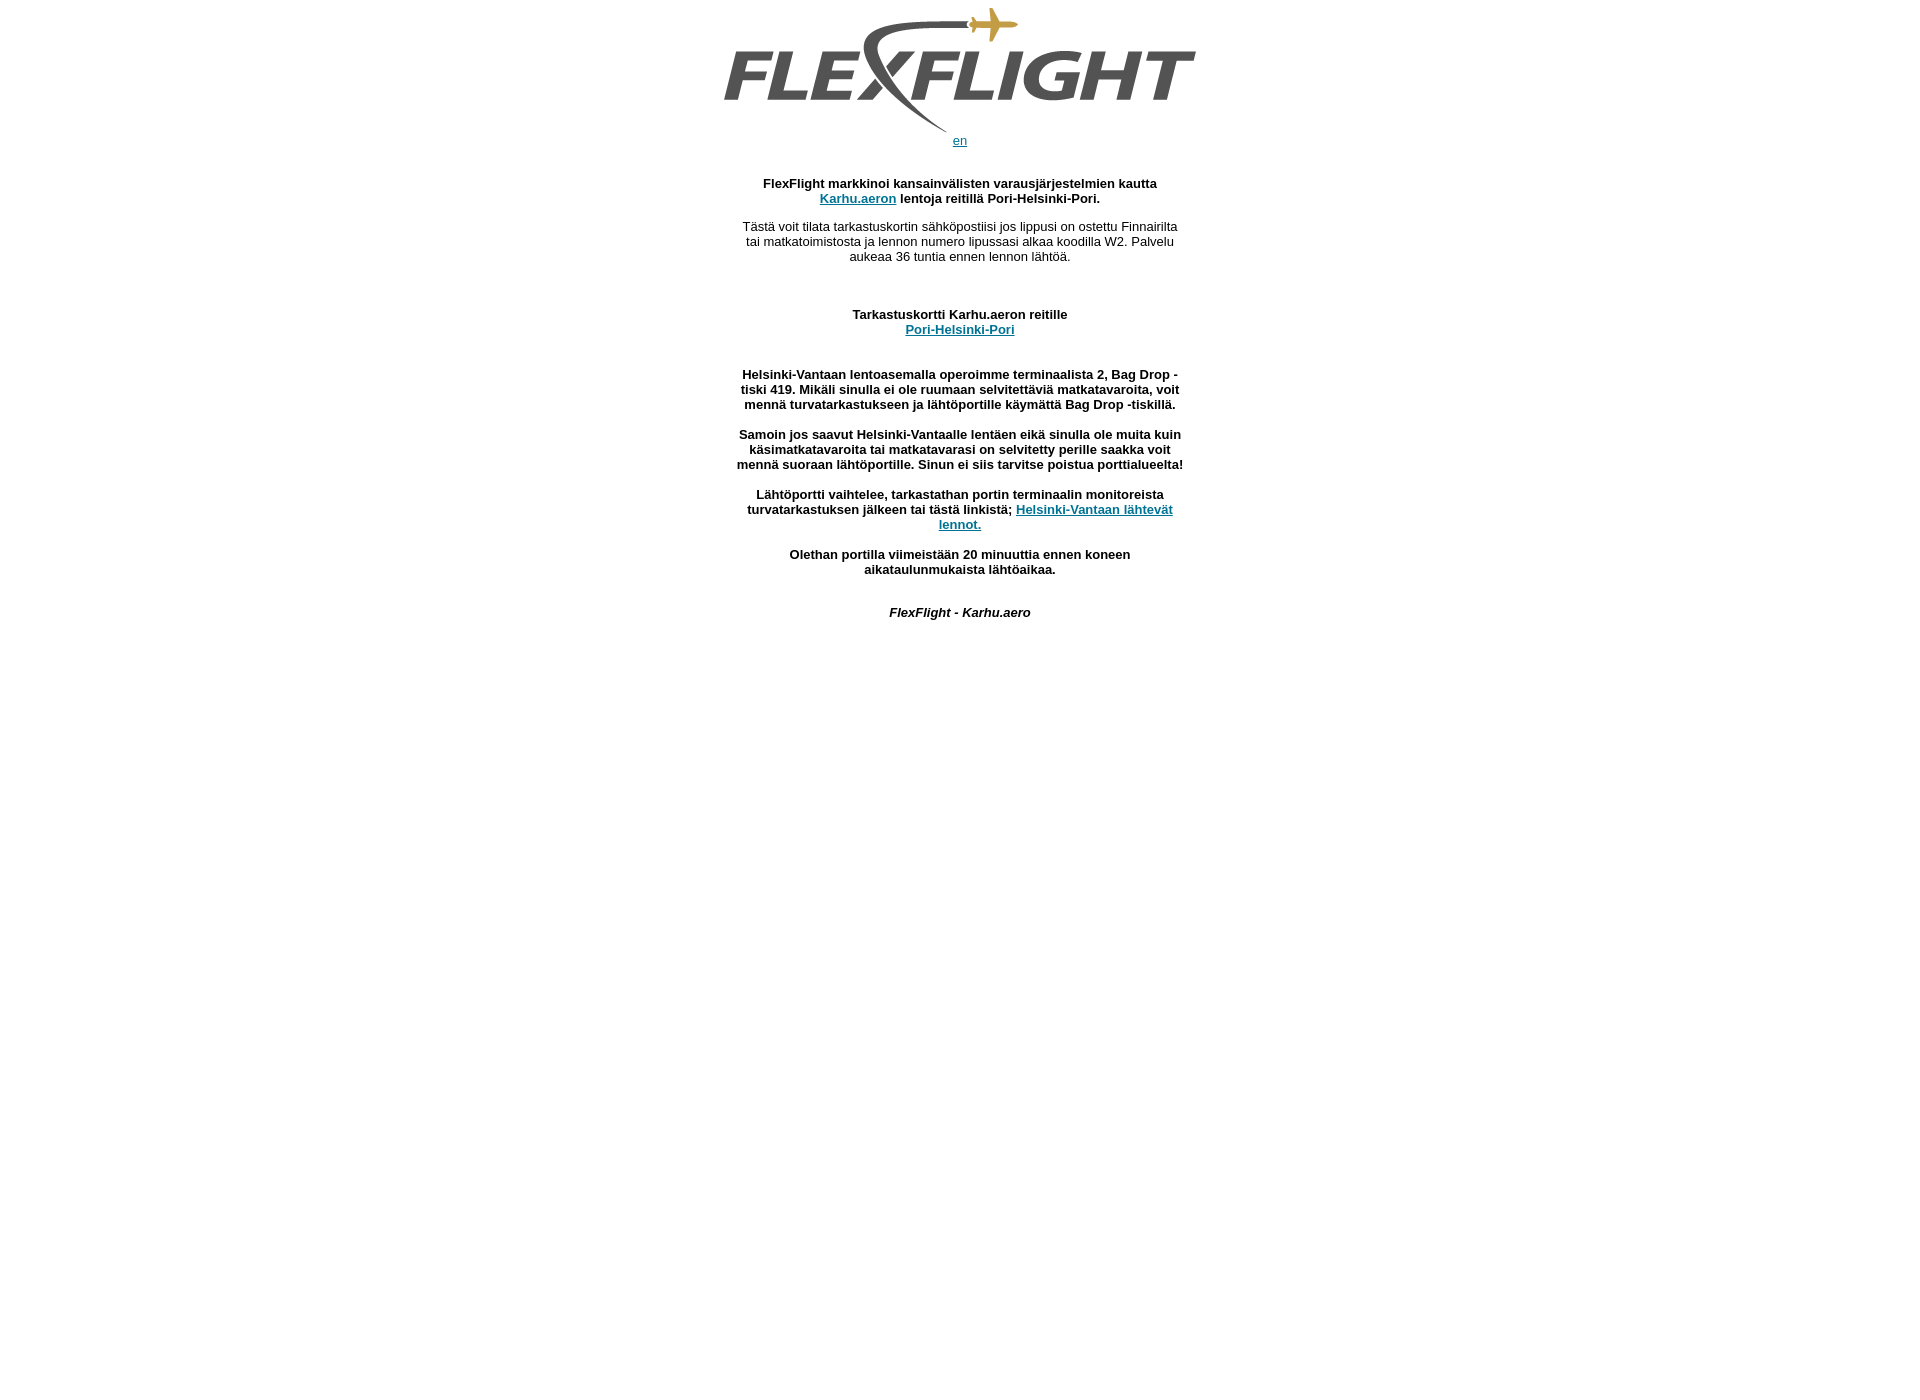 Näyttökuva flexflight.fi